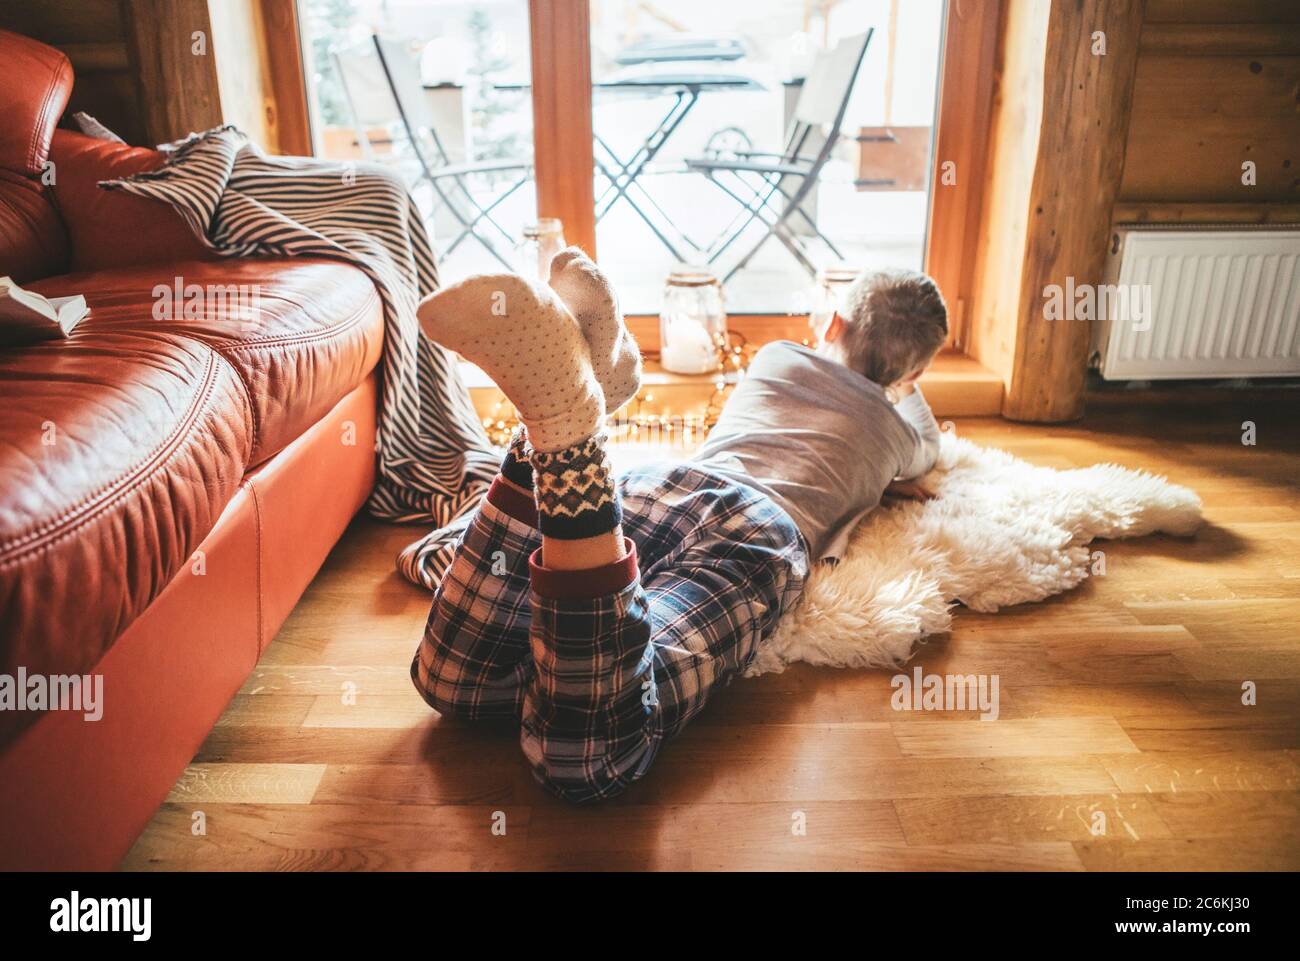 https://c8.alamy.com/comp/2C6KJ30/boy-lying-on-floor-on-sheepskin-and-looking-in-window-dressed-in-cozy-home-pajama-and-warm-socks-2C6KJ30.jpg